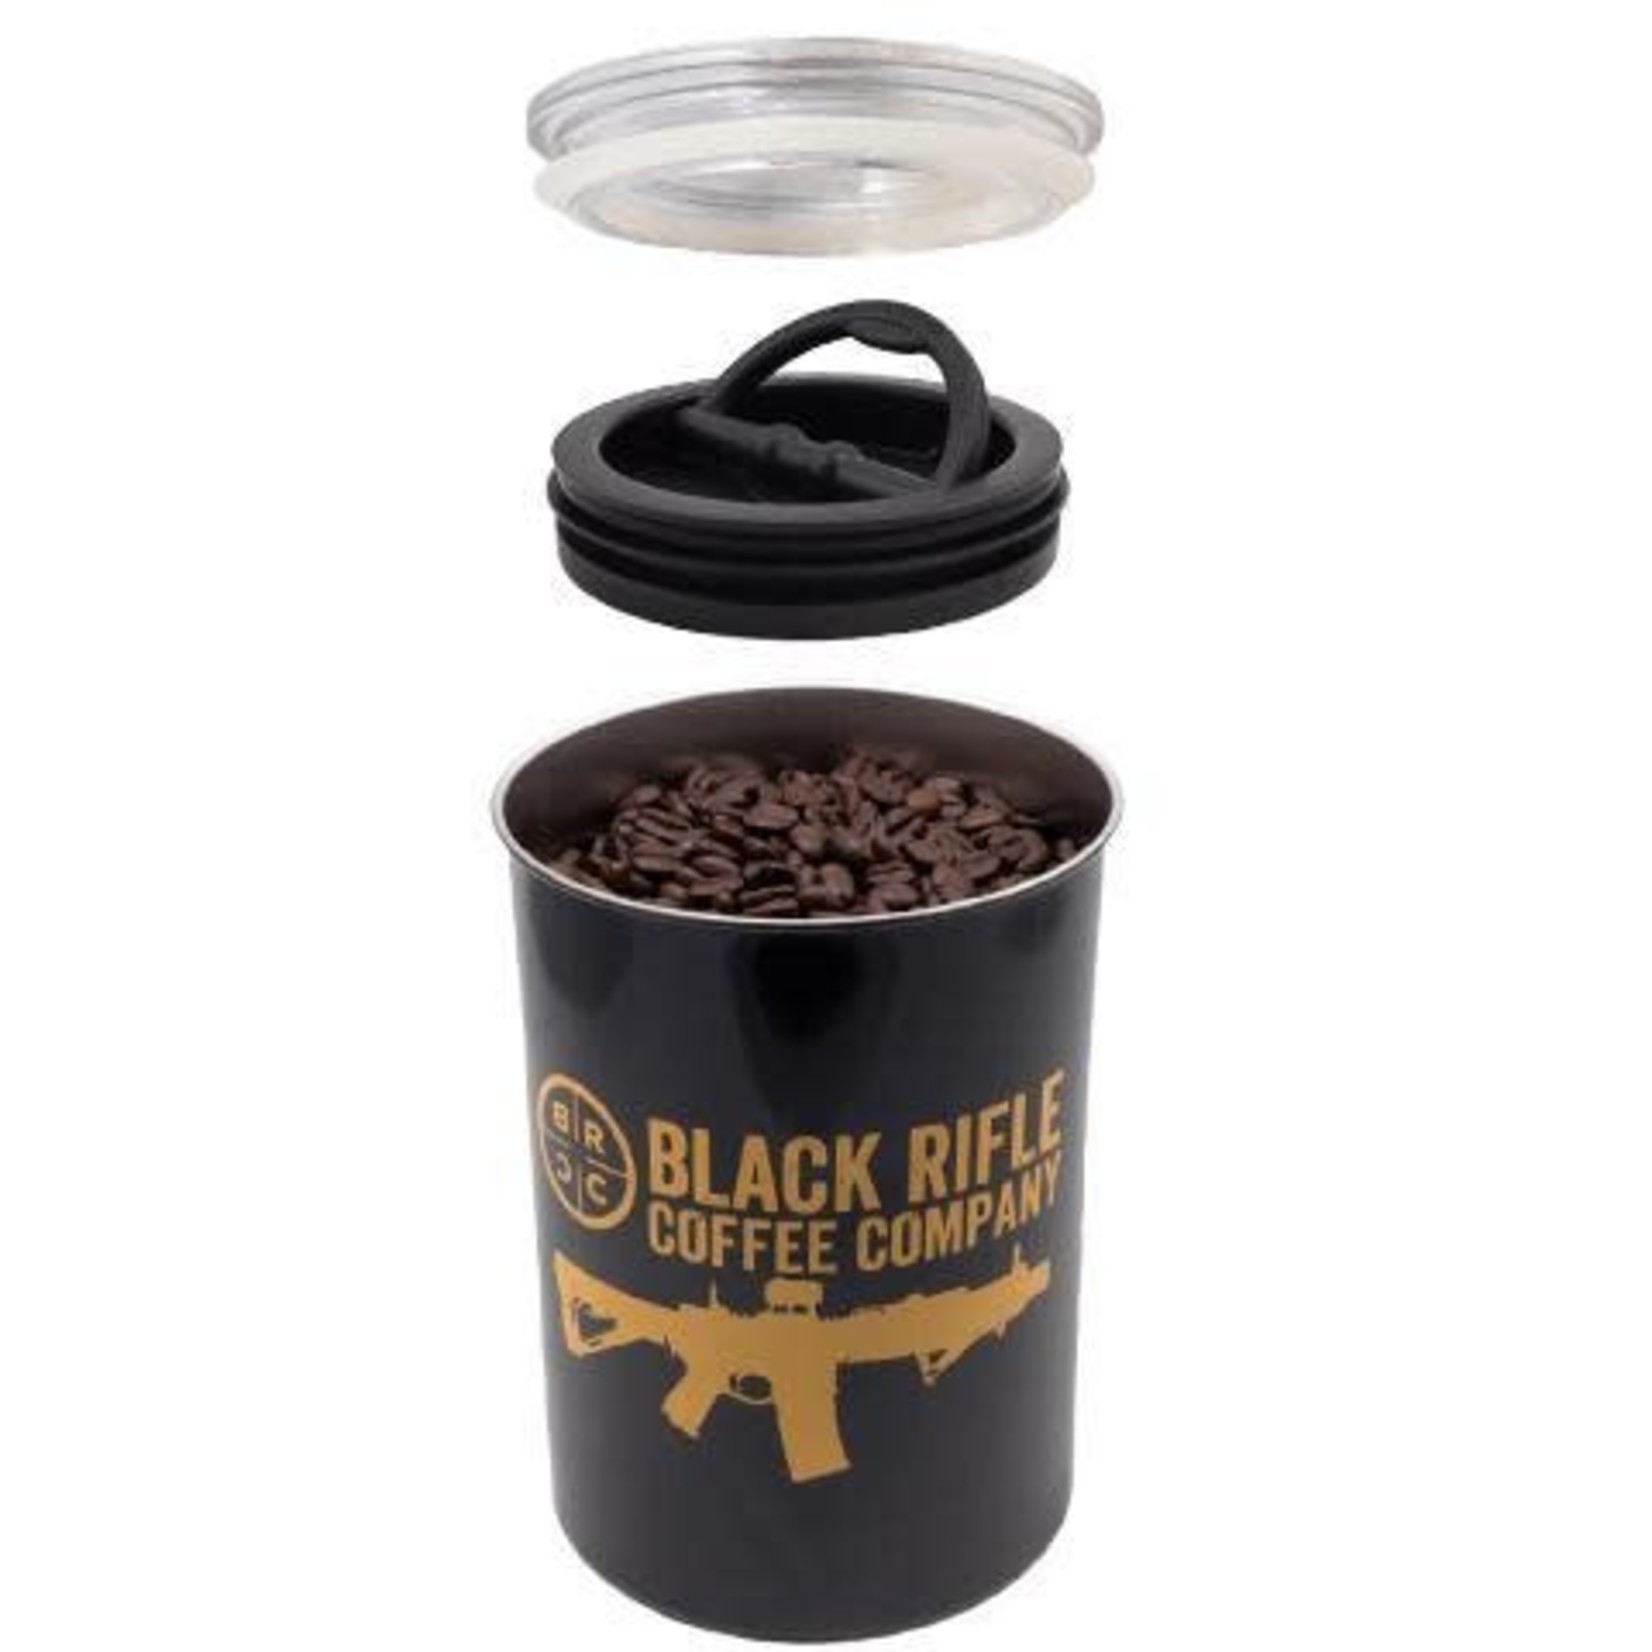 Black Rifle Coffee Black Rifle Coffee Company Airtight Container - Black